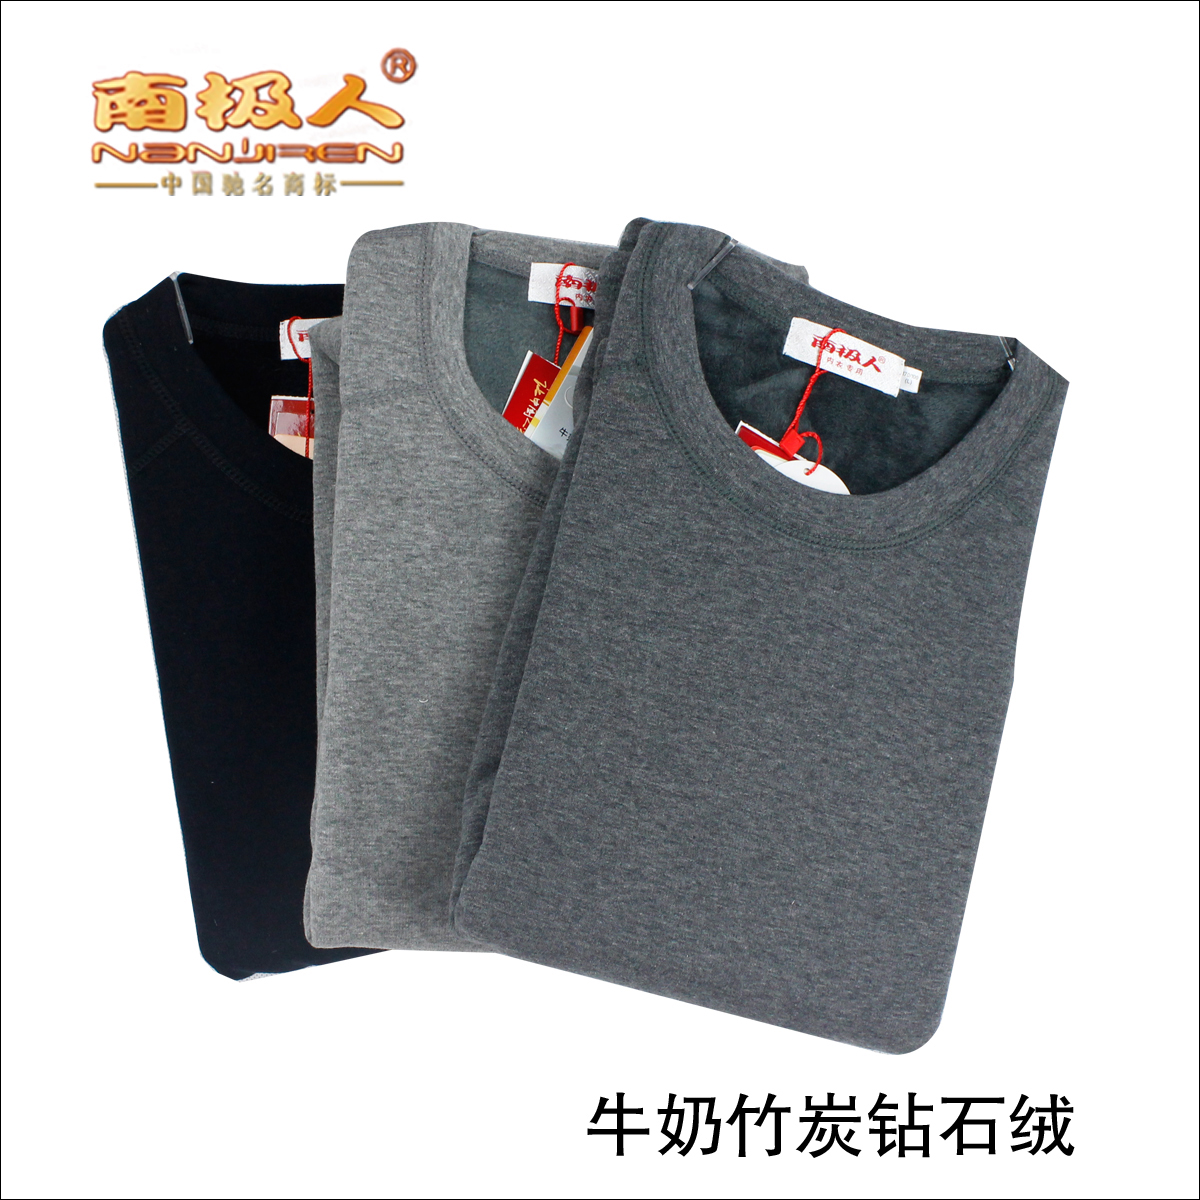 Milk bamboo male thermal underwear set belt kneepad 1011